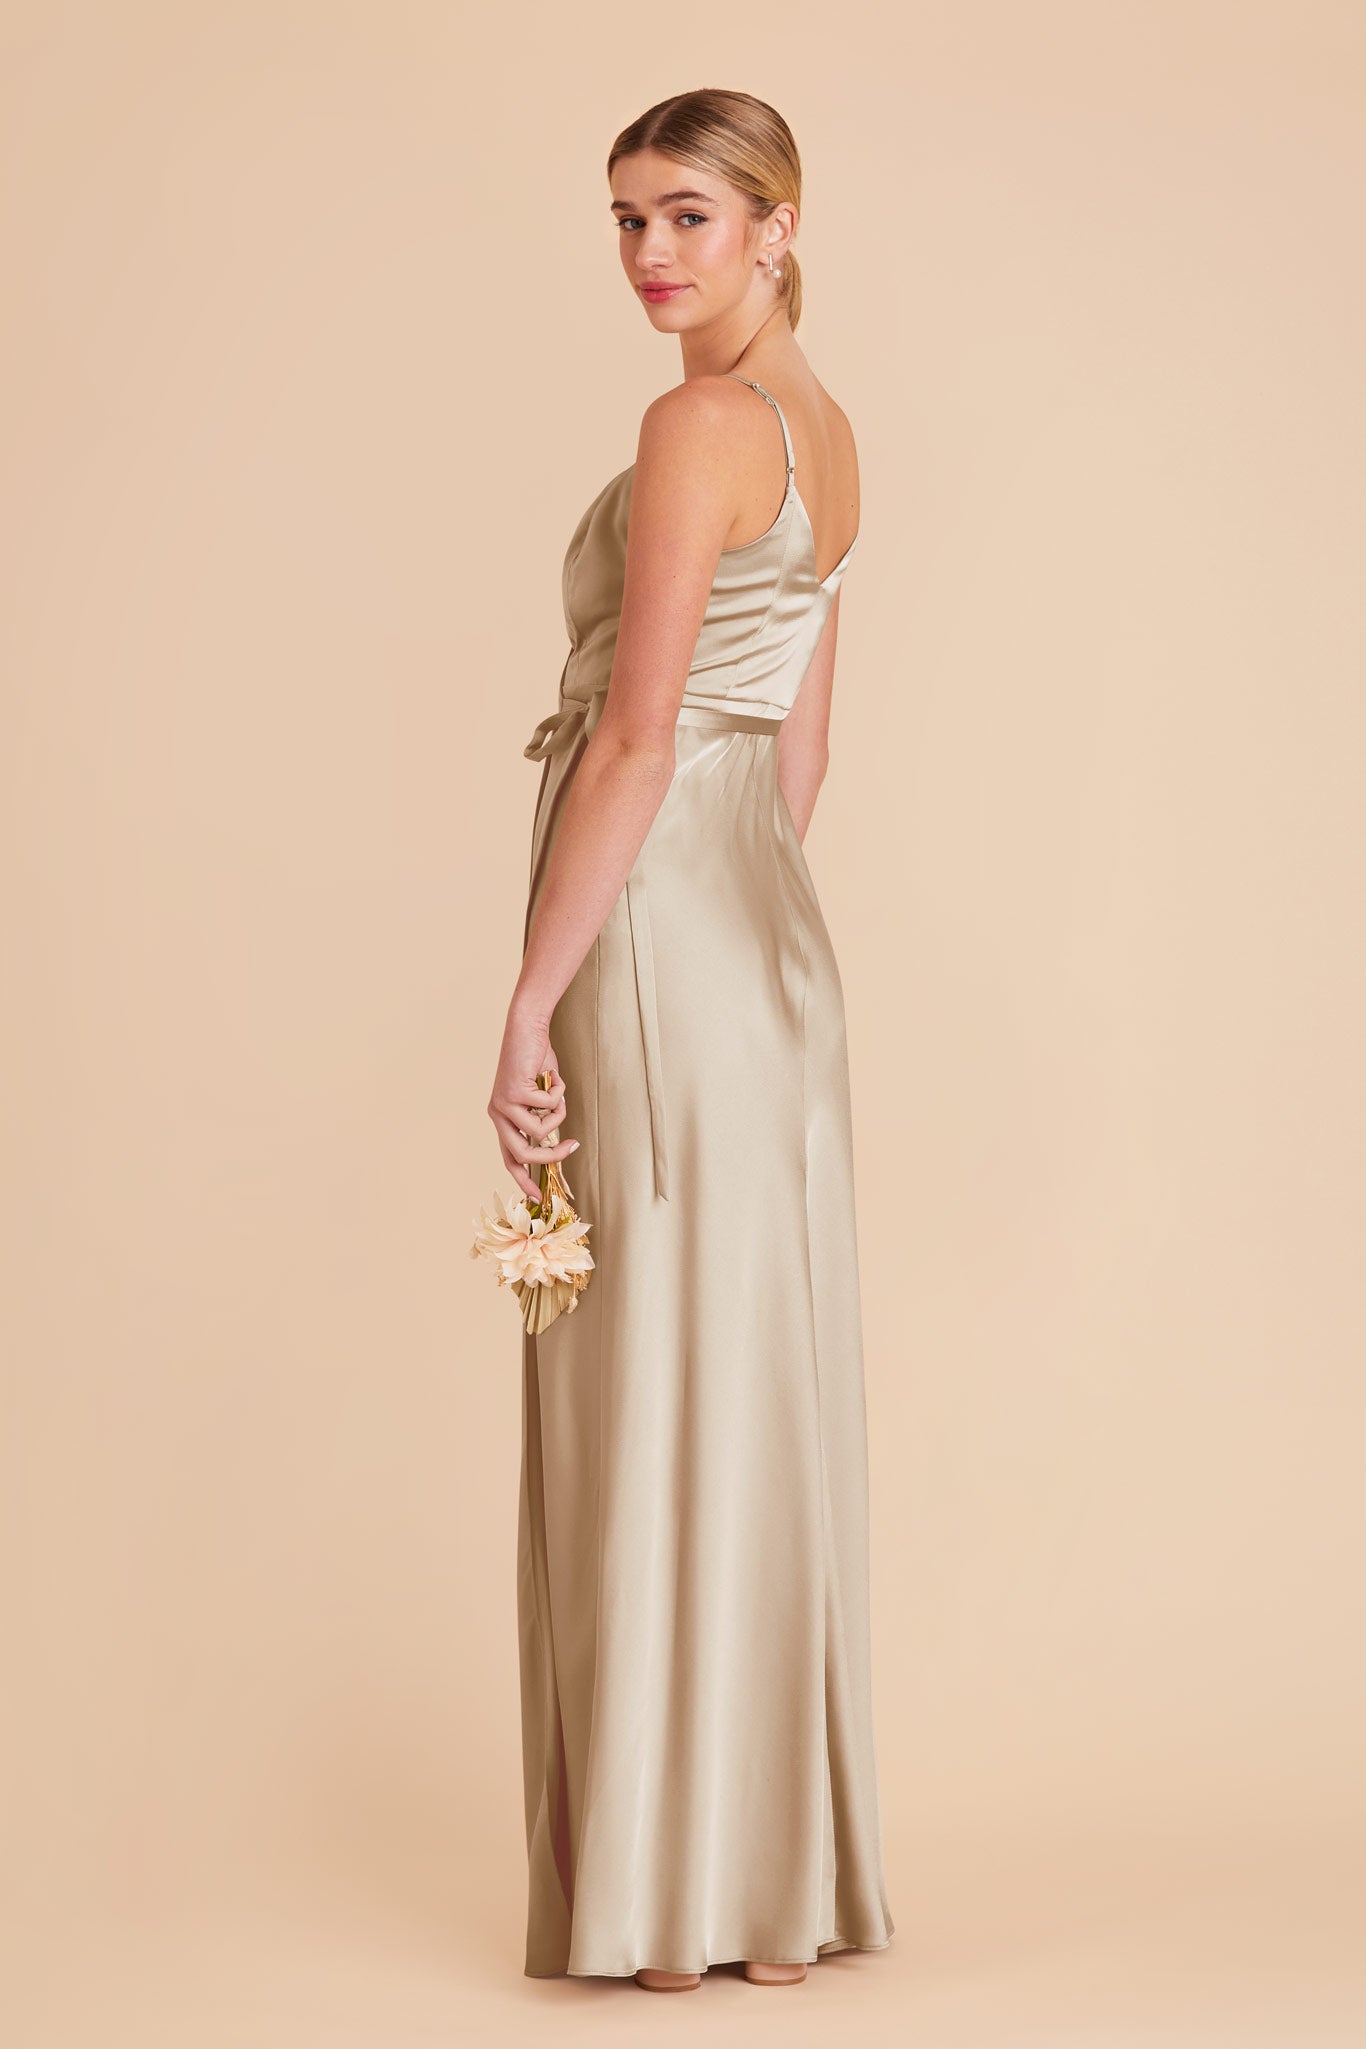 Neutral Champagne Cindy Matte Satin Dress by Birdy Grey